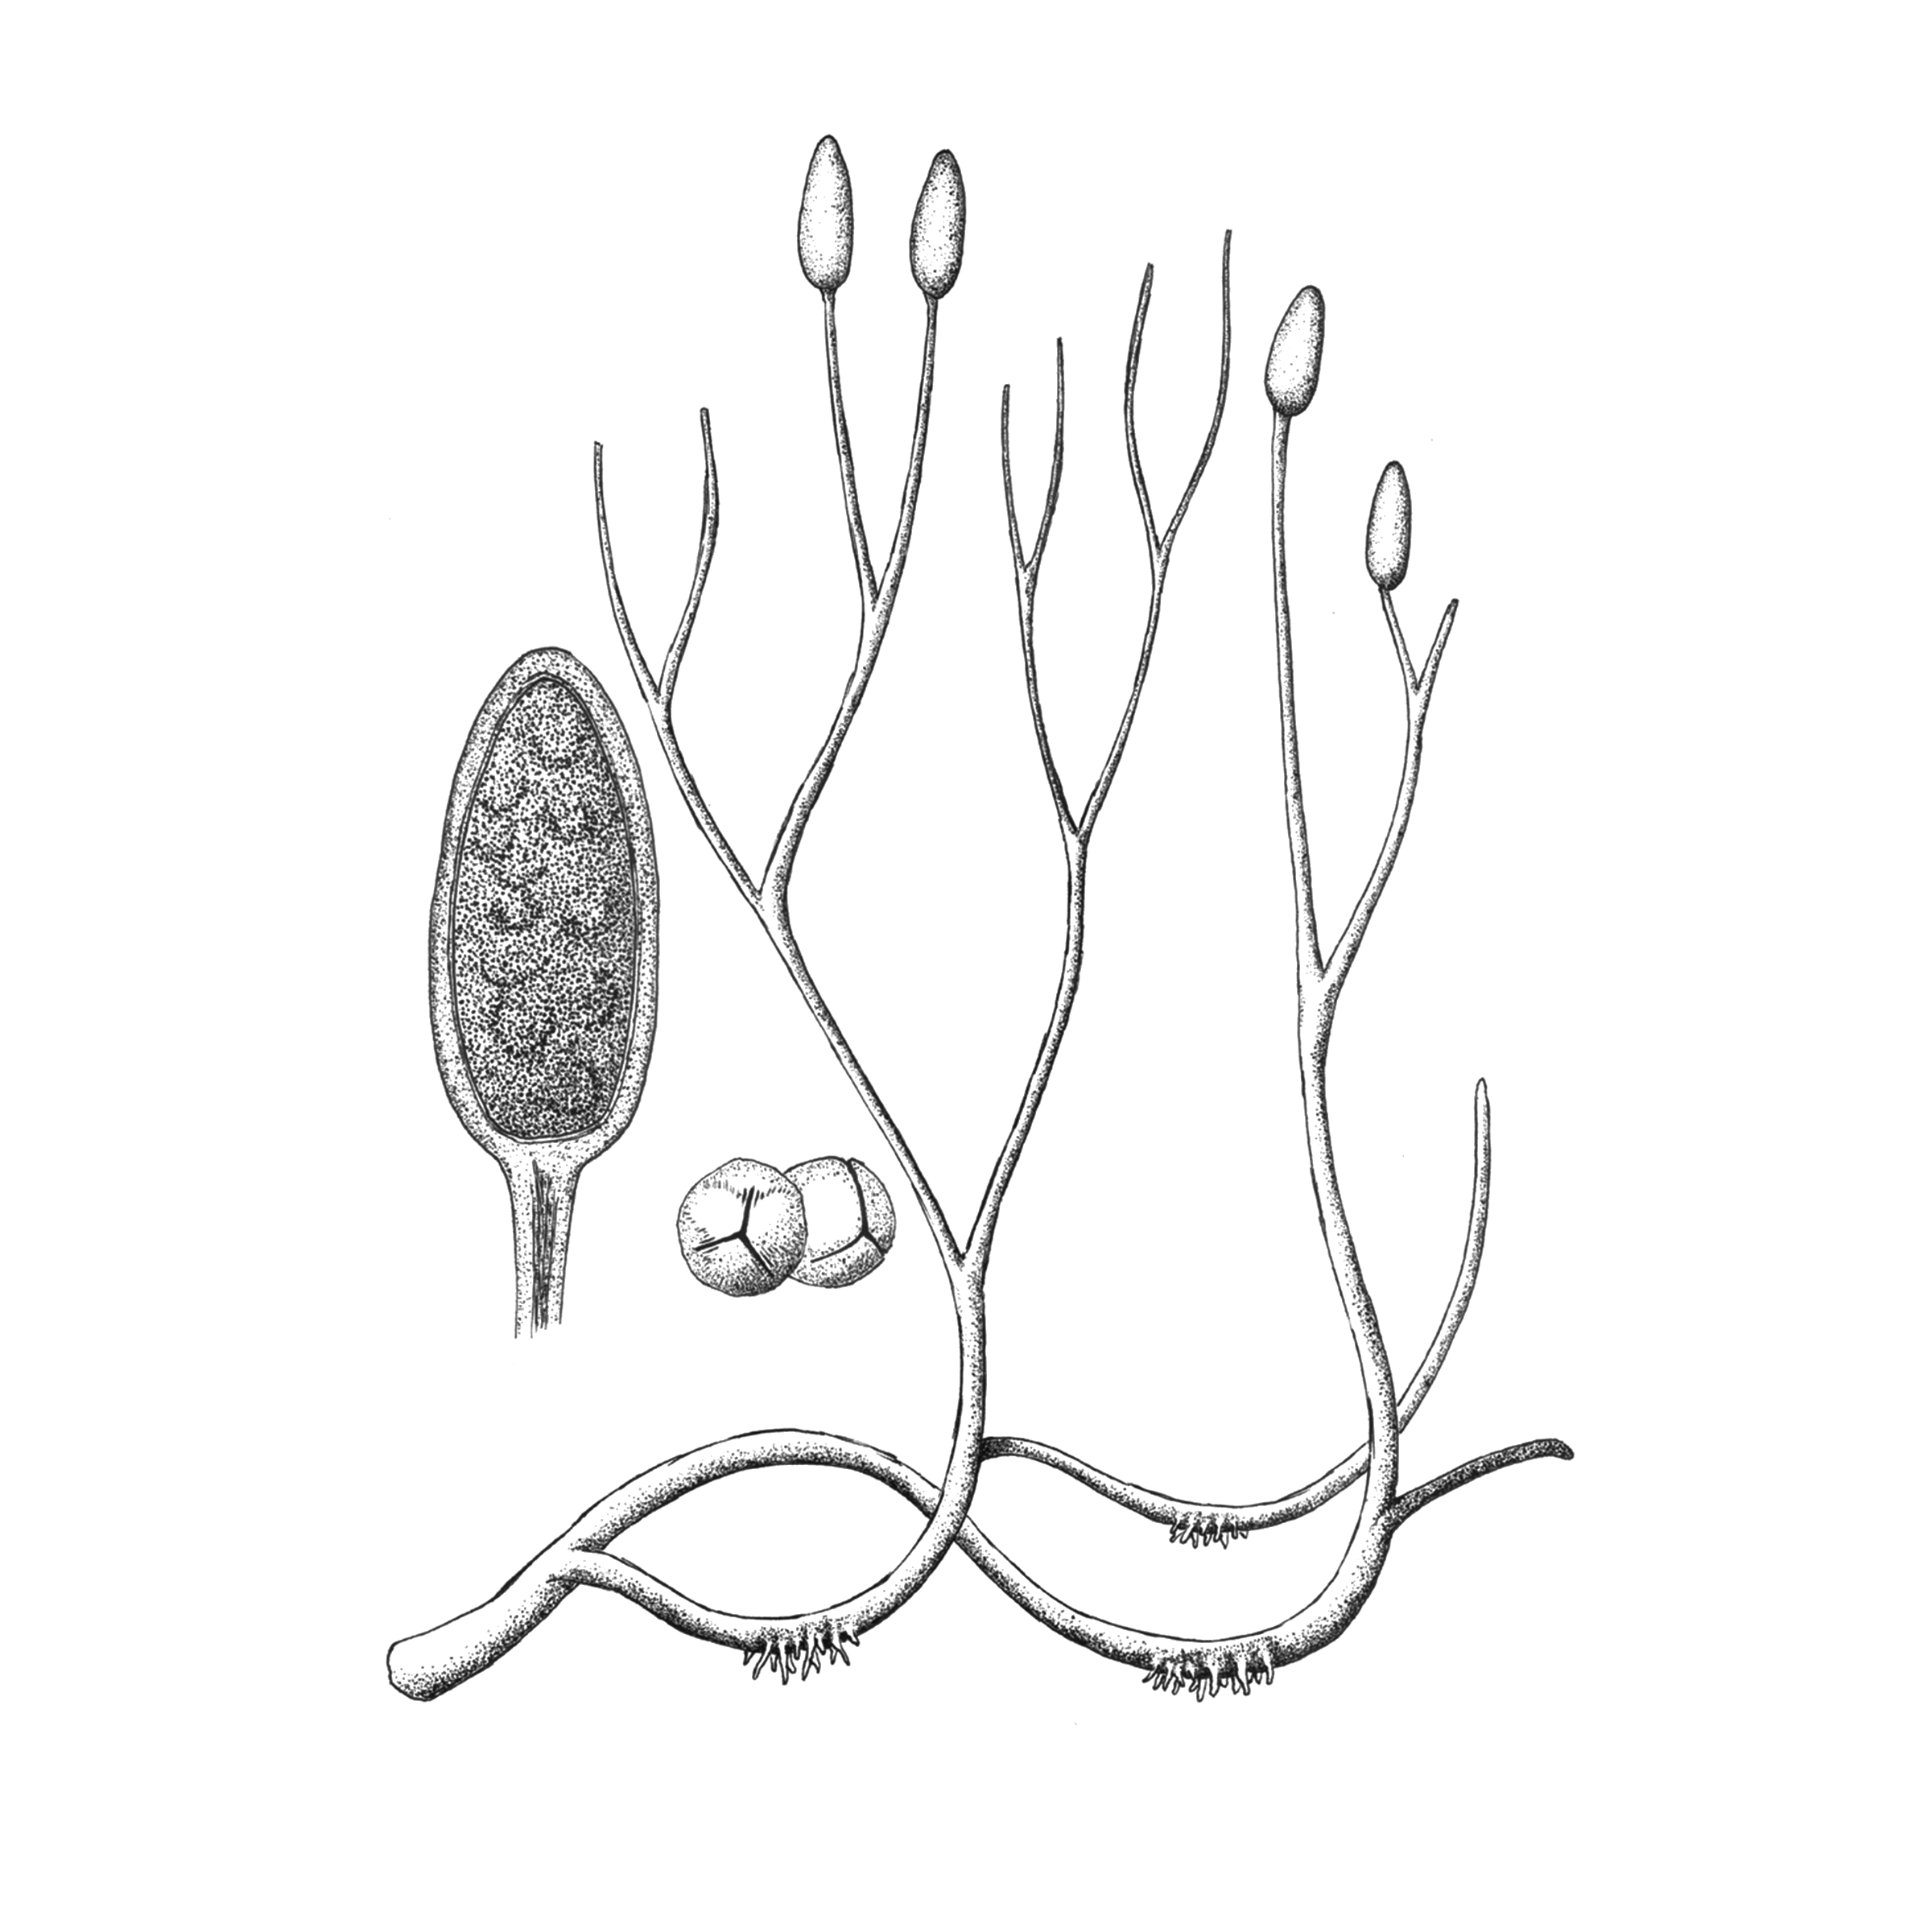 The Bryophyte Nomenclator — Classification